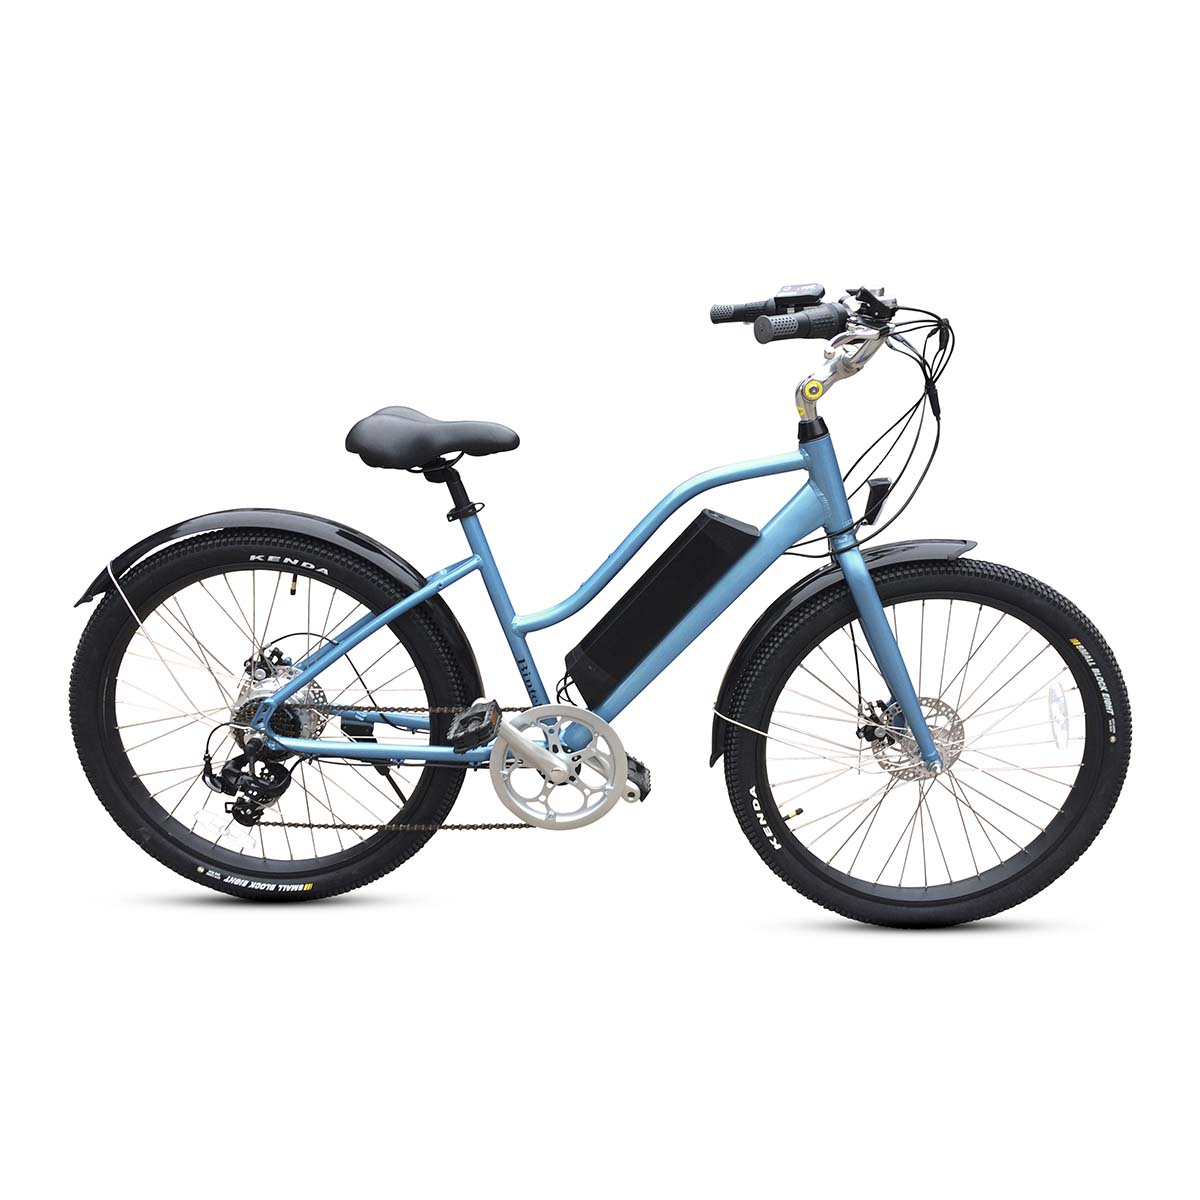 Bintelli B1 electric bicycles cruiser in light blue